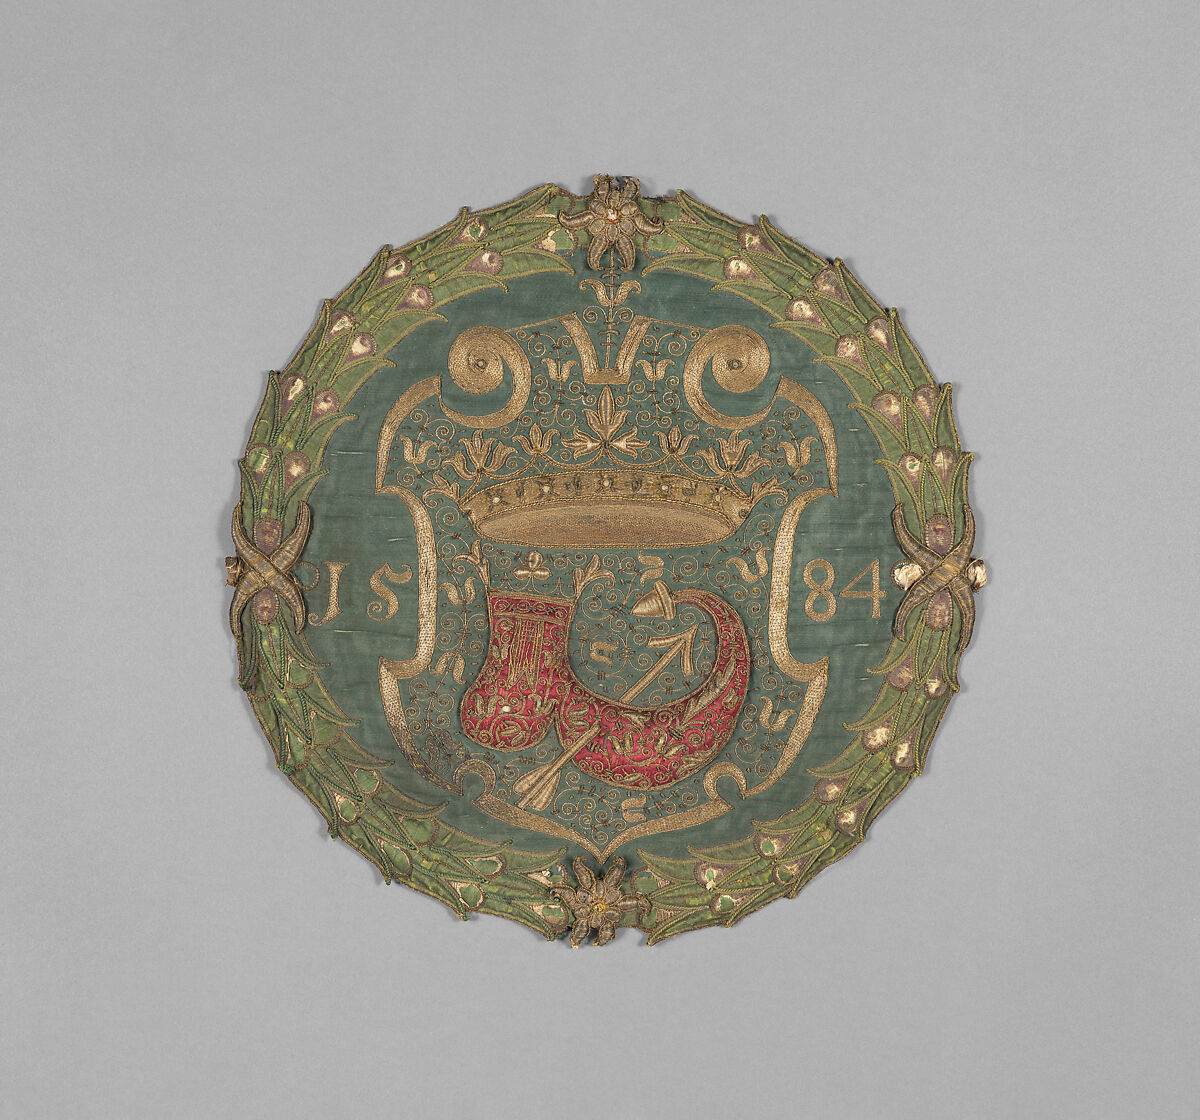 Coffin shield, Silk, metal thread, linen padding, gilt glass, German